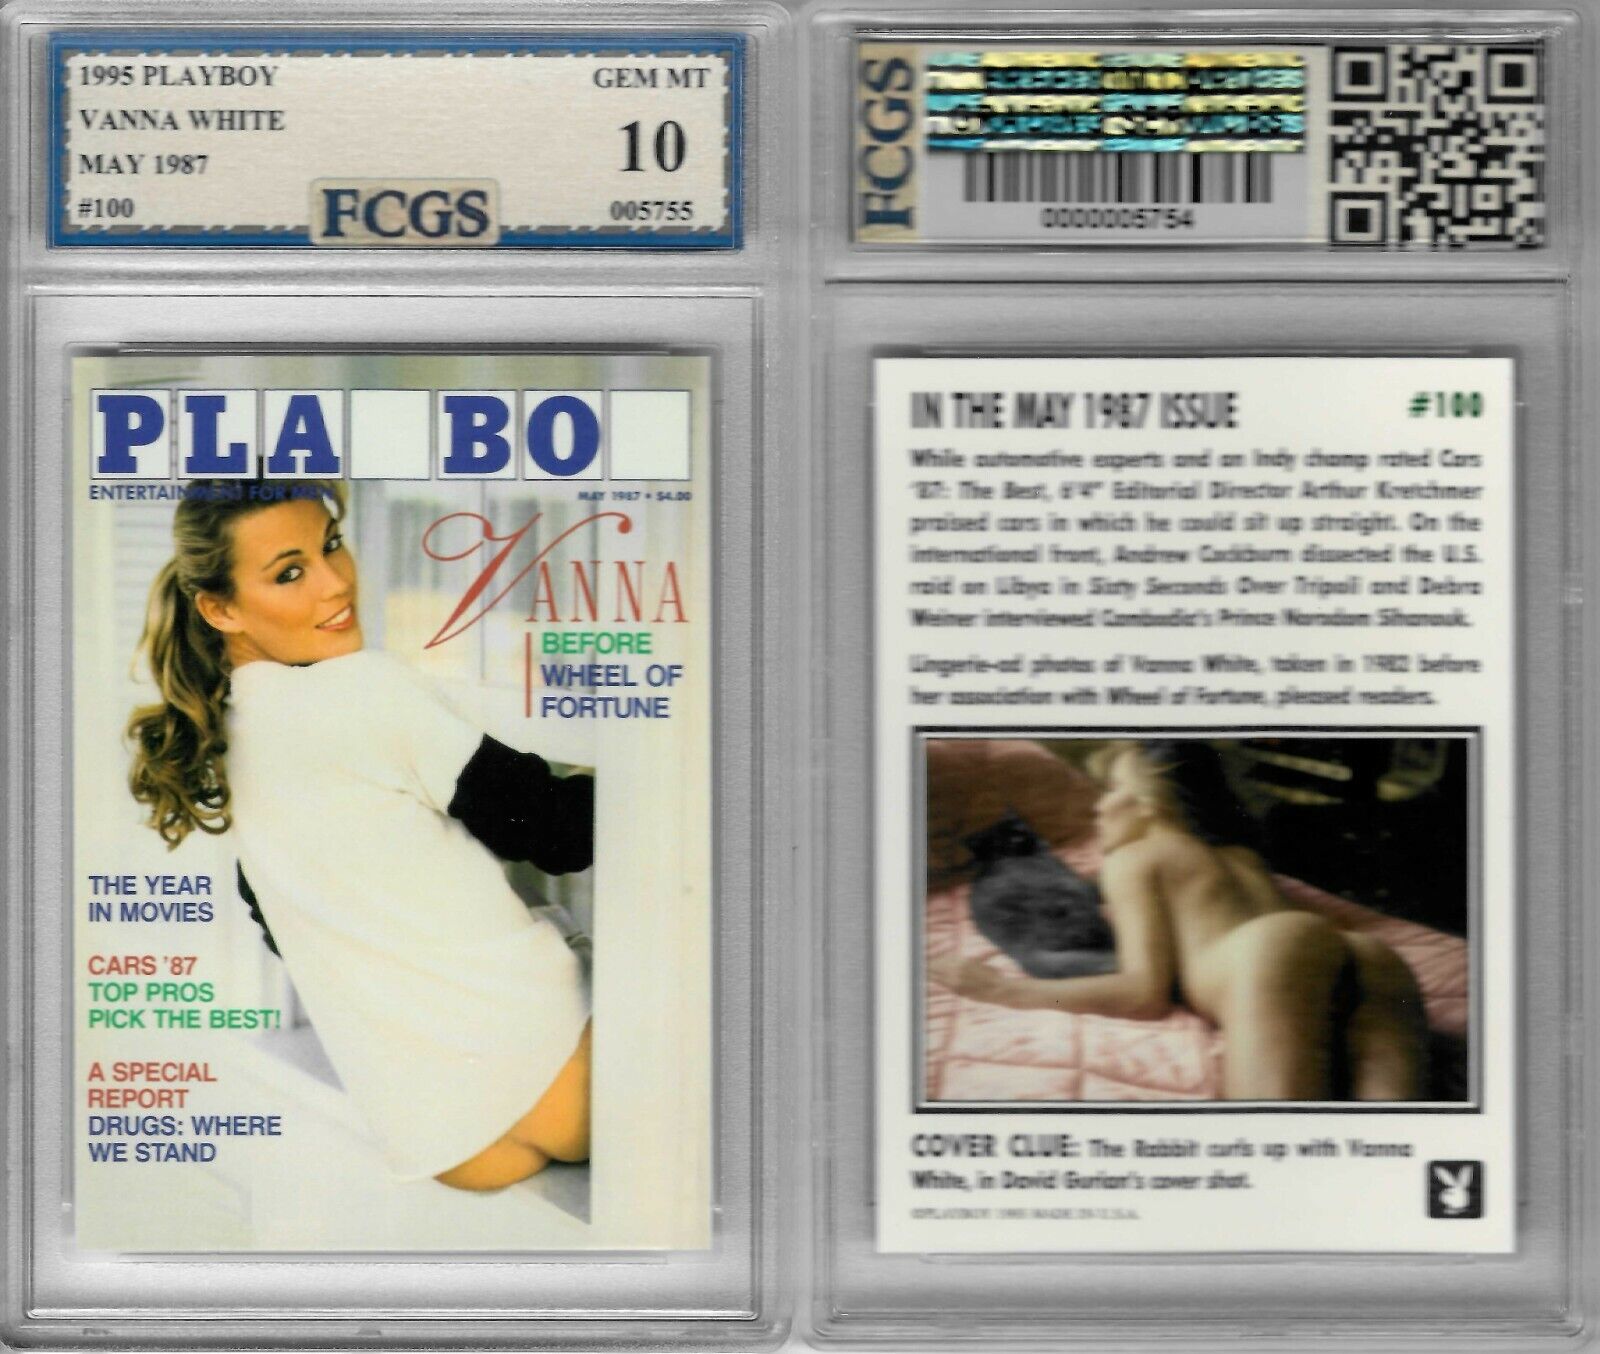 1995 Playboy Vanna White Card #100 Graded FCGS 10 GEM MINT